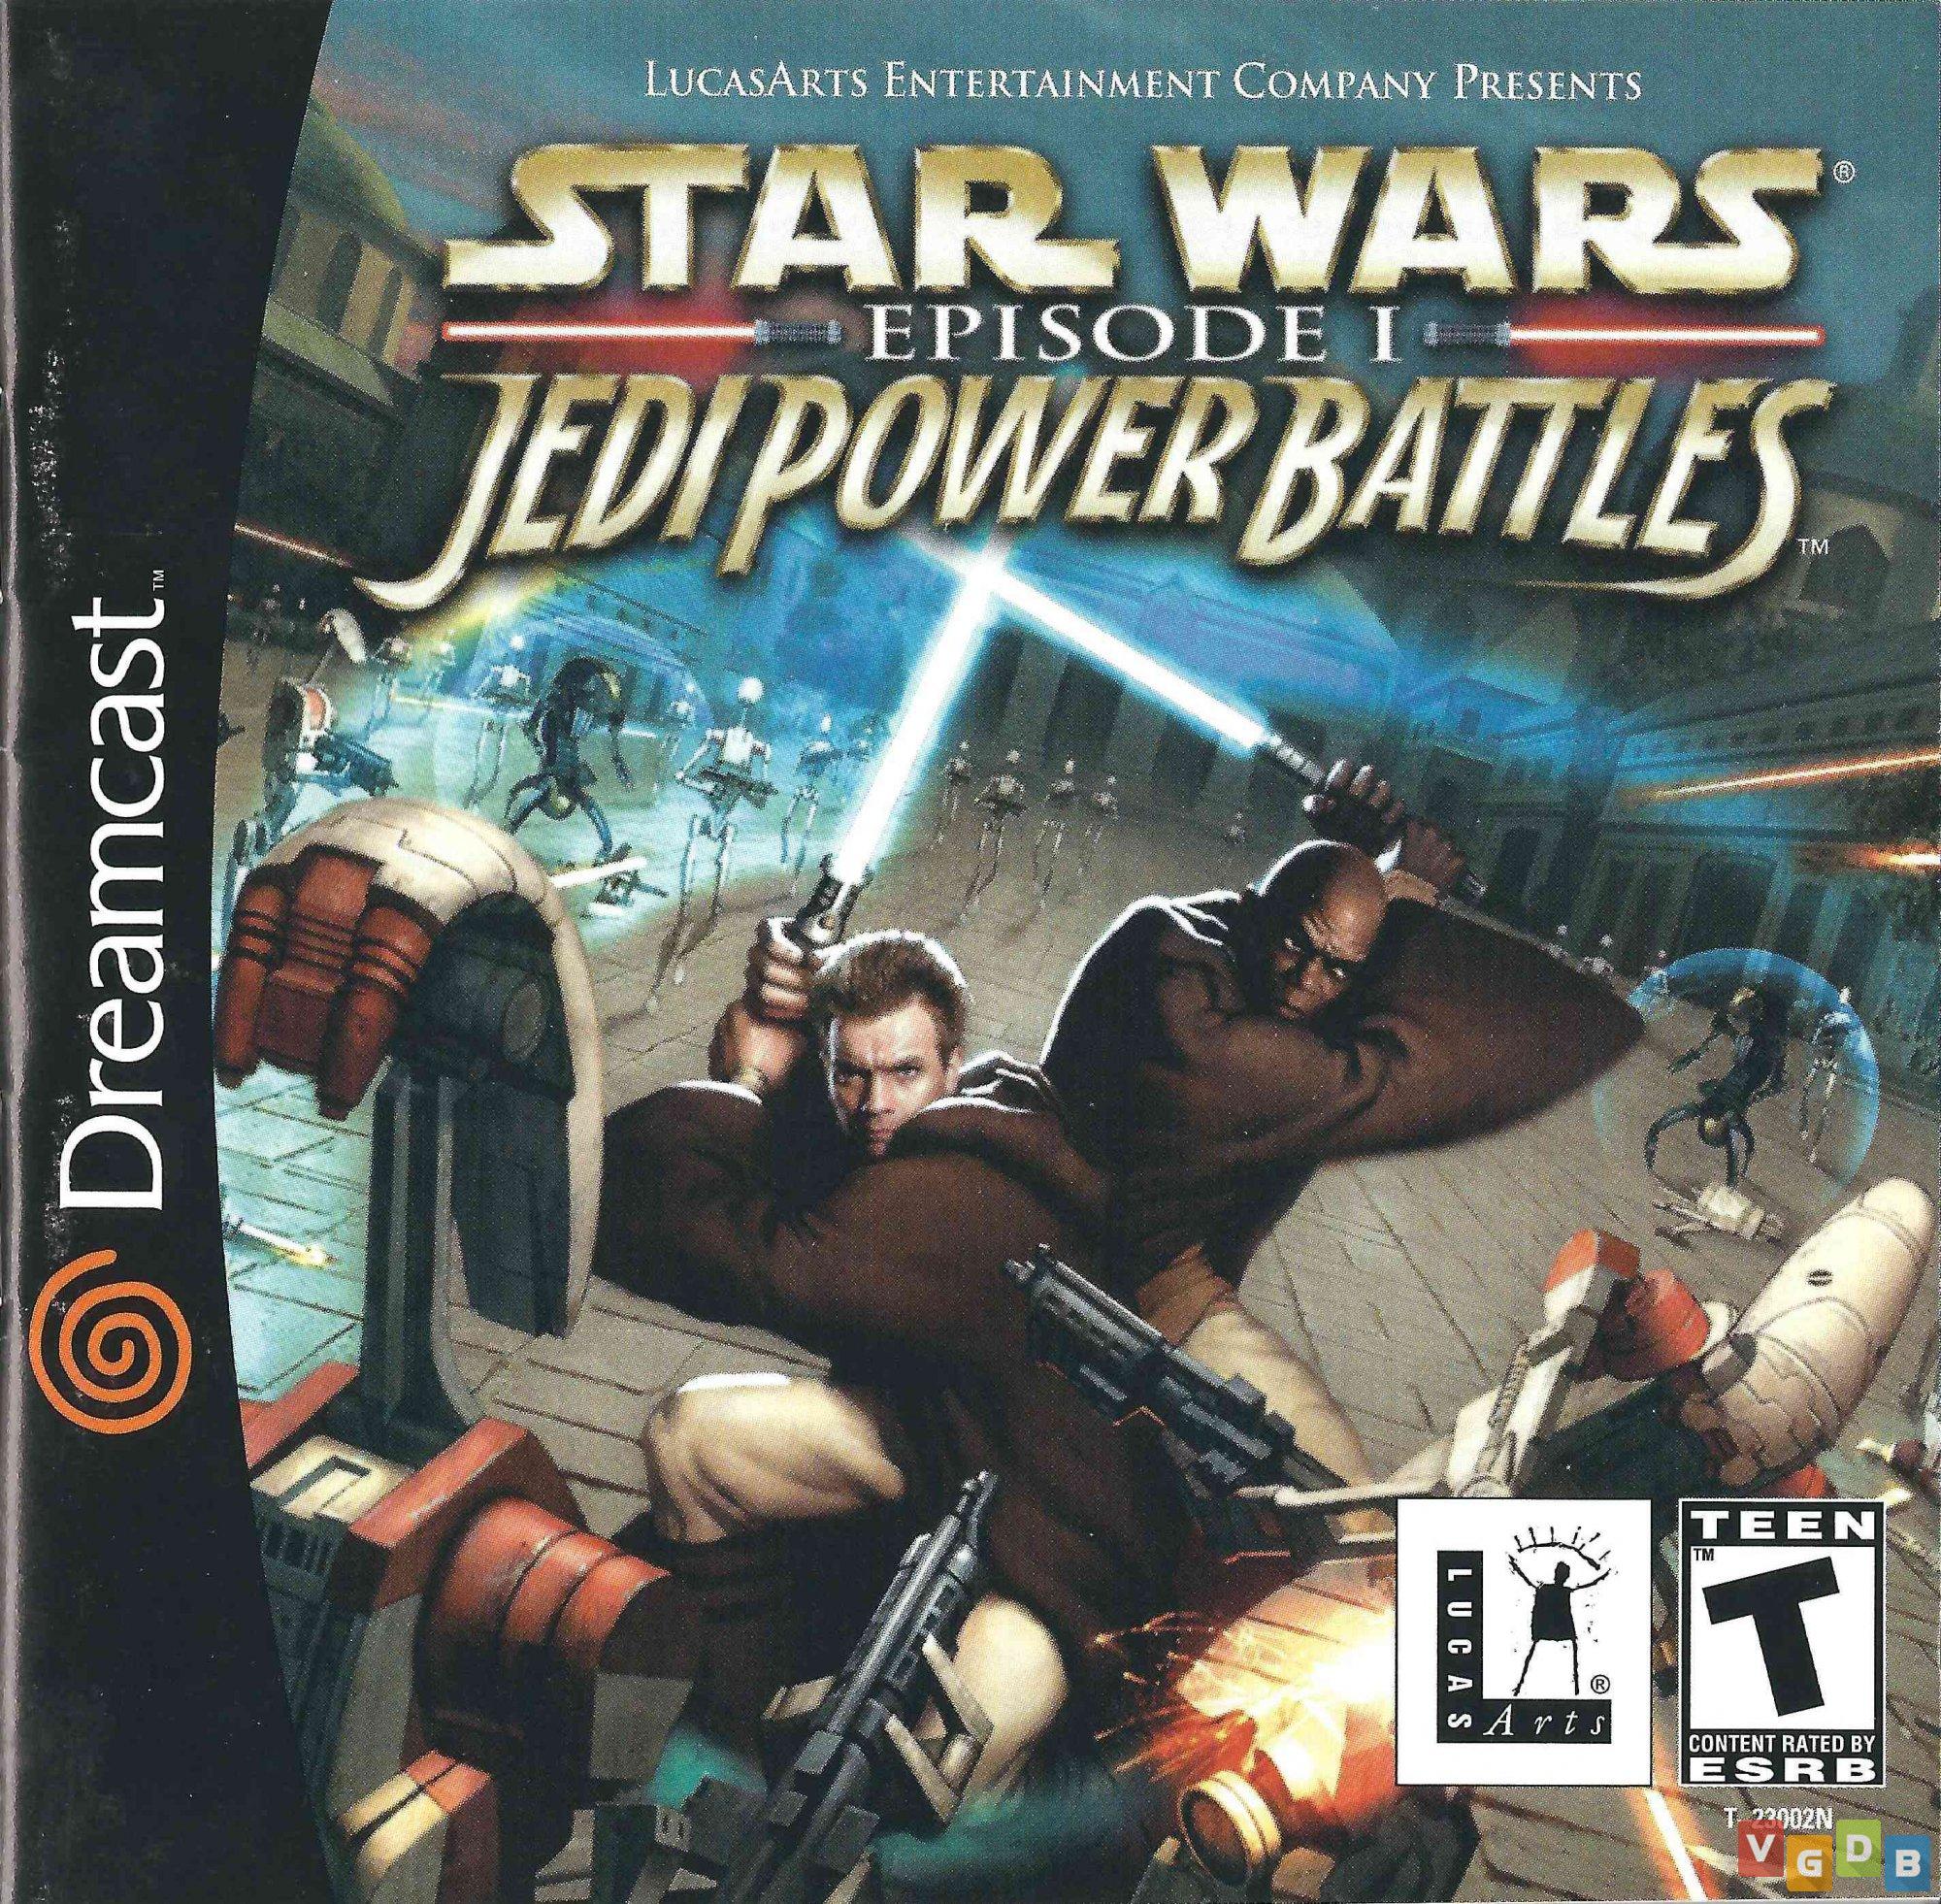 Star wars jedi power. Sony PLAYSTATION 1 Jedi Power Battles. Star Wars - Episode i - Jedi Power Battle ps1 обложка. Звёздные войны пс1. Star Wars ps1 Jedi Power.